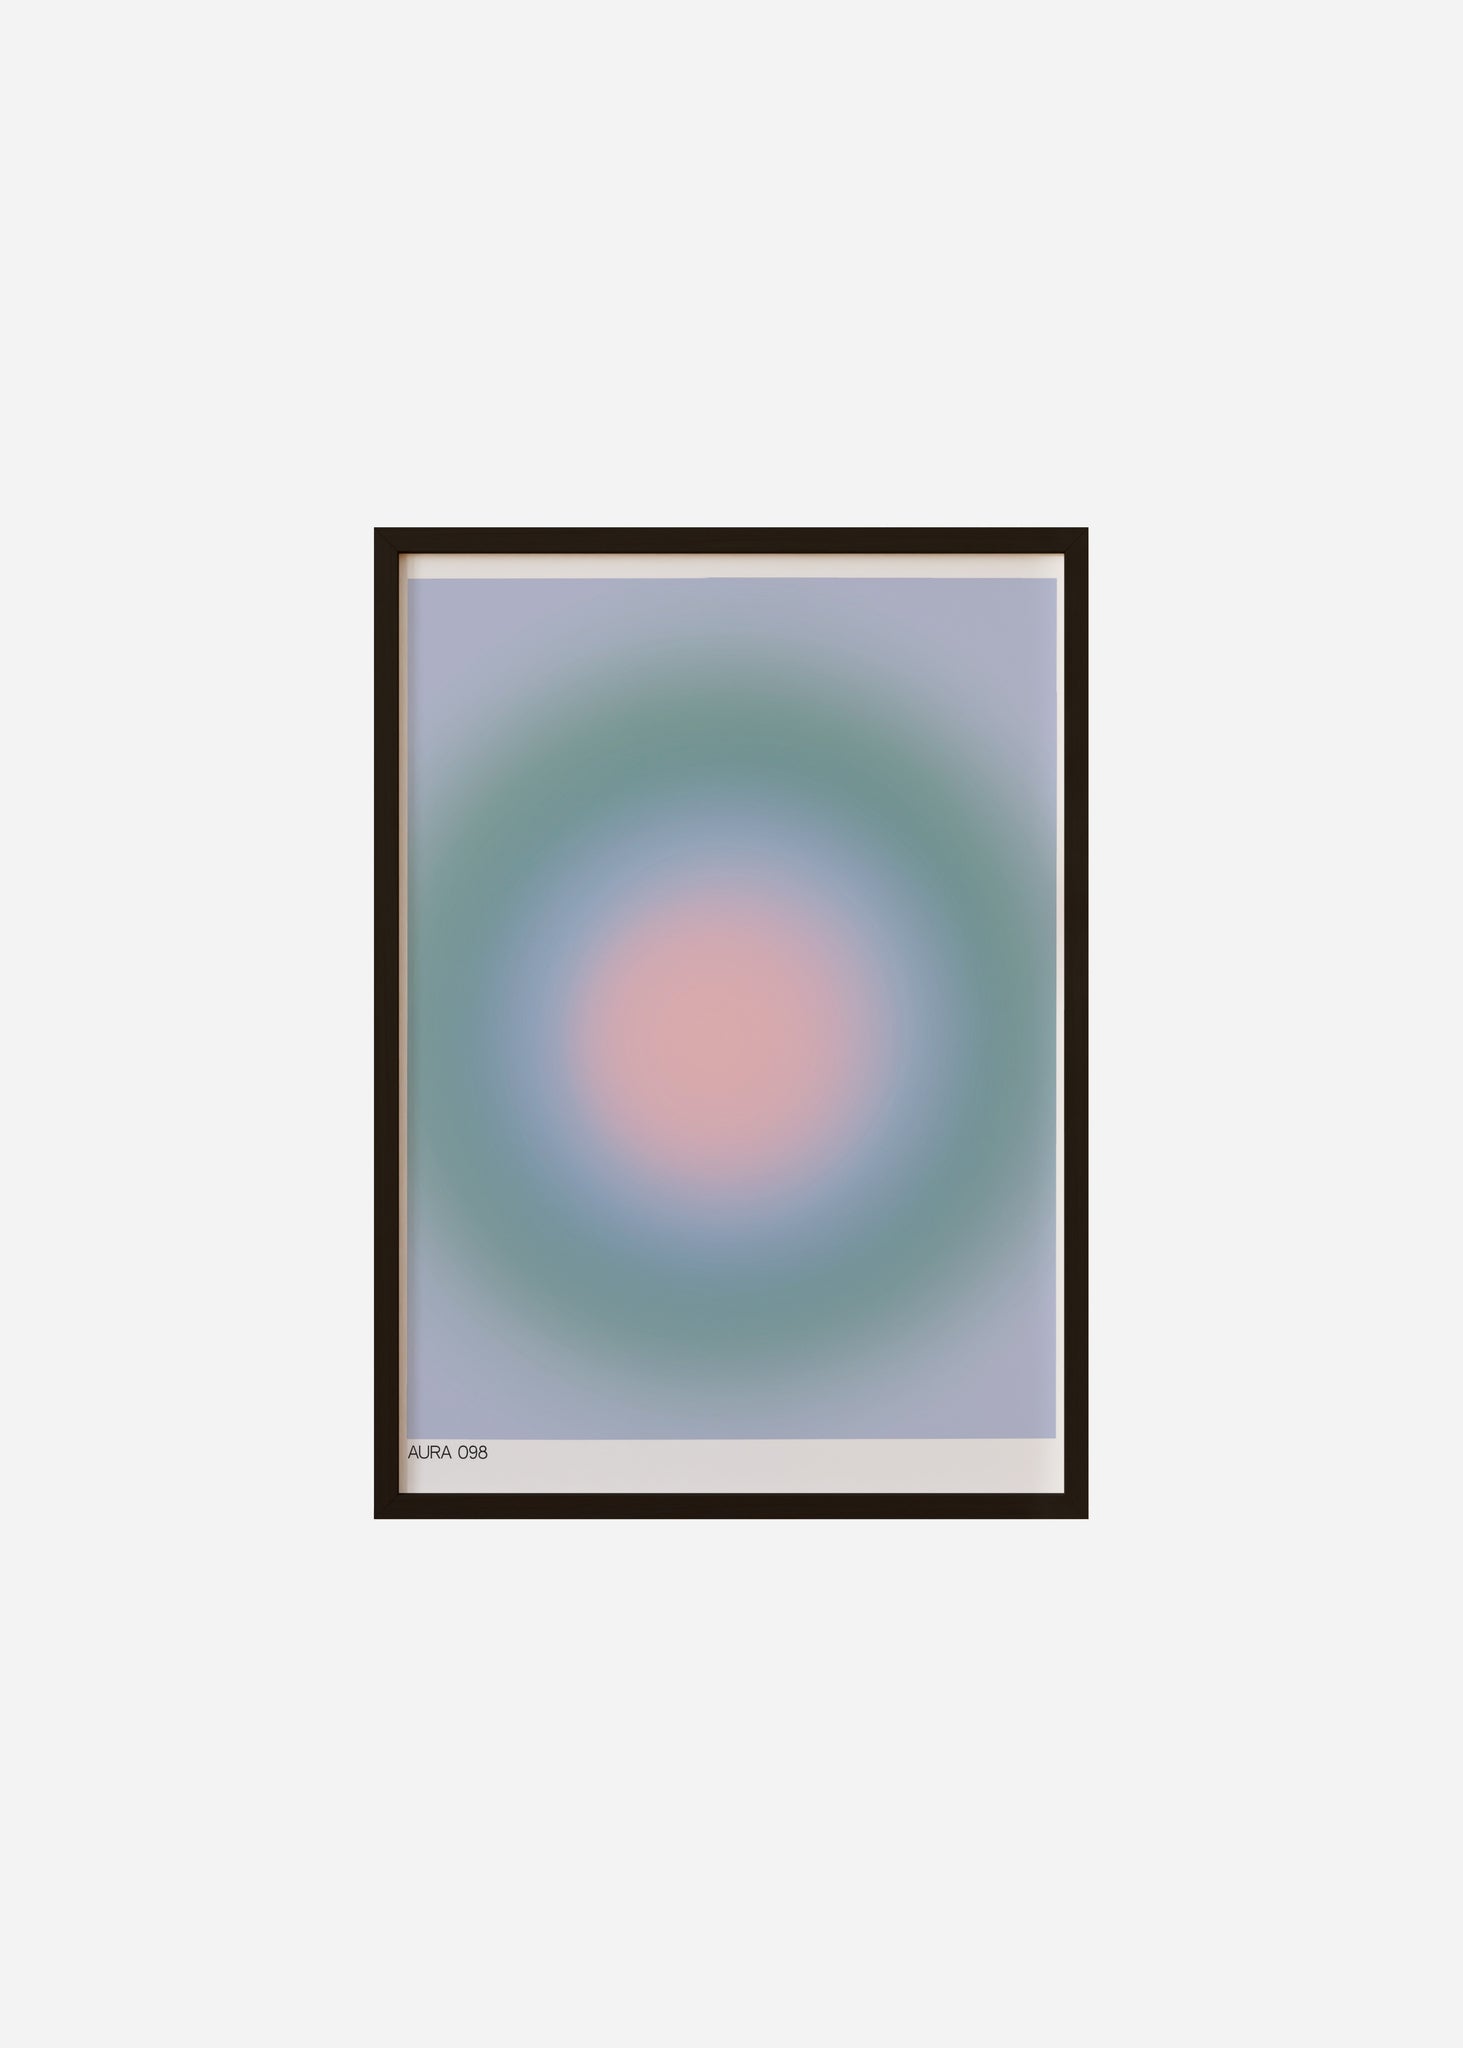 aura 098 Framed Print